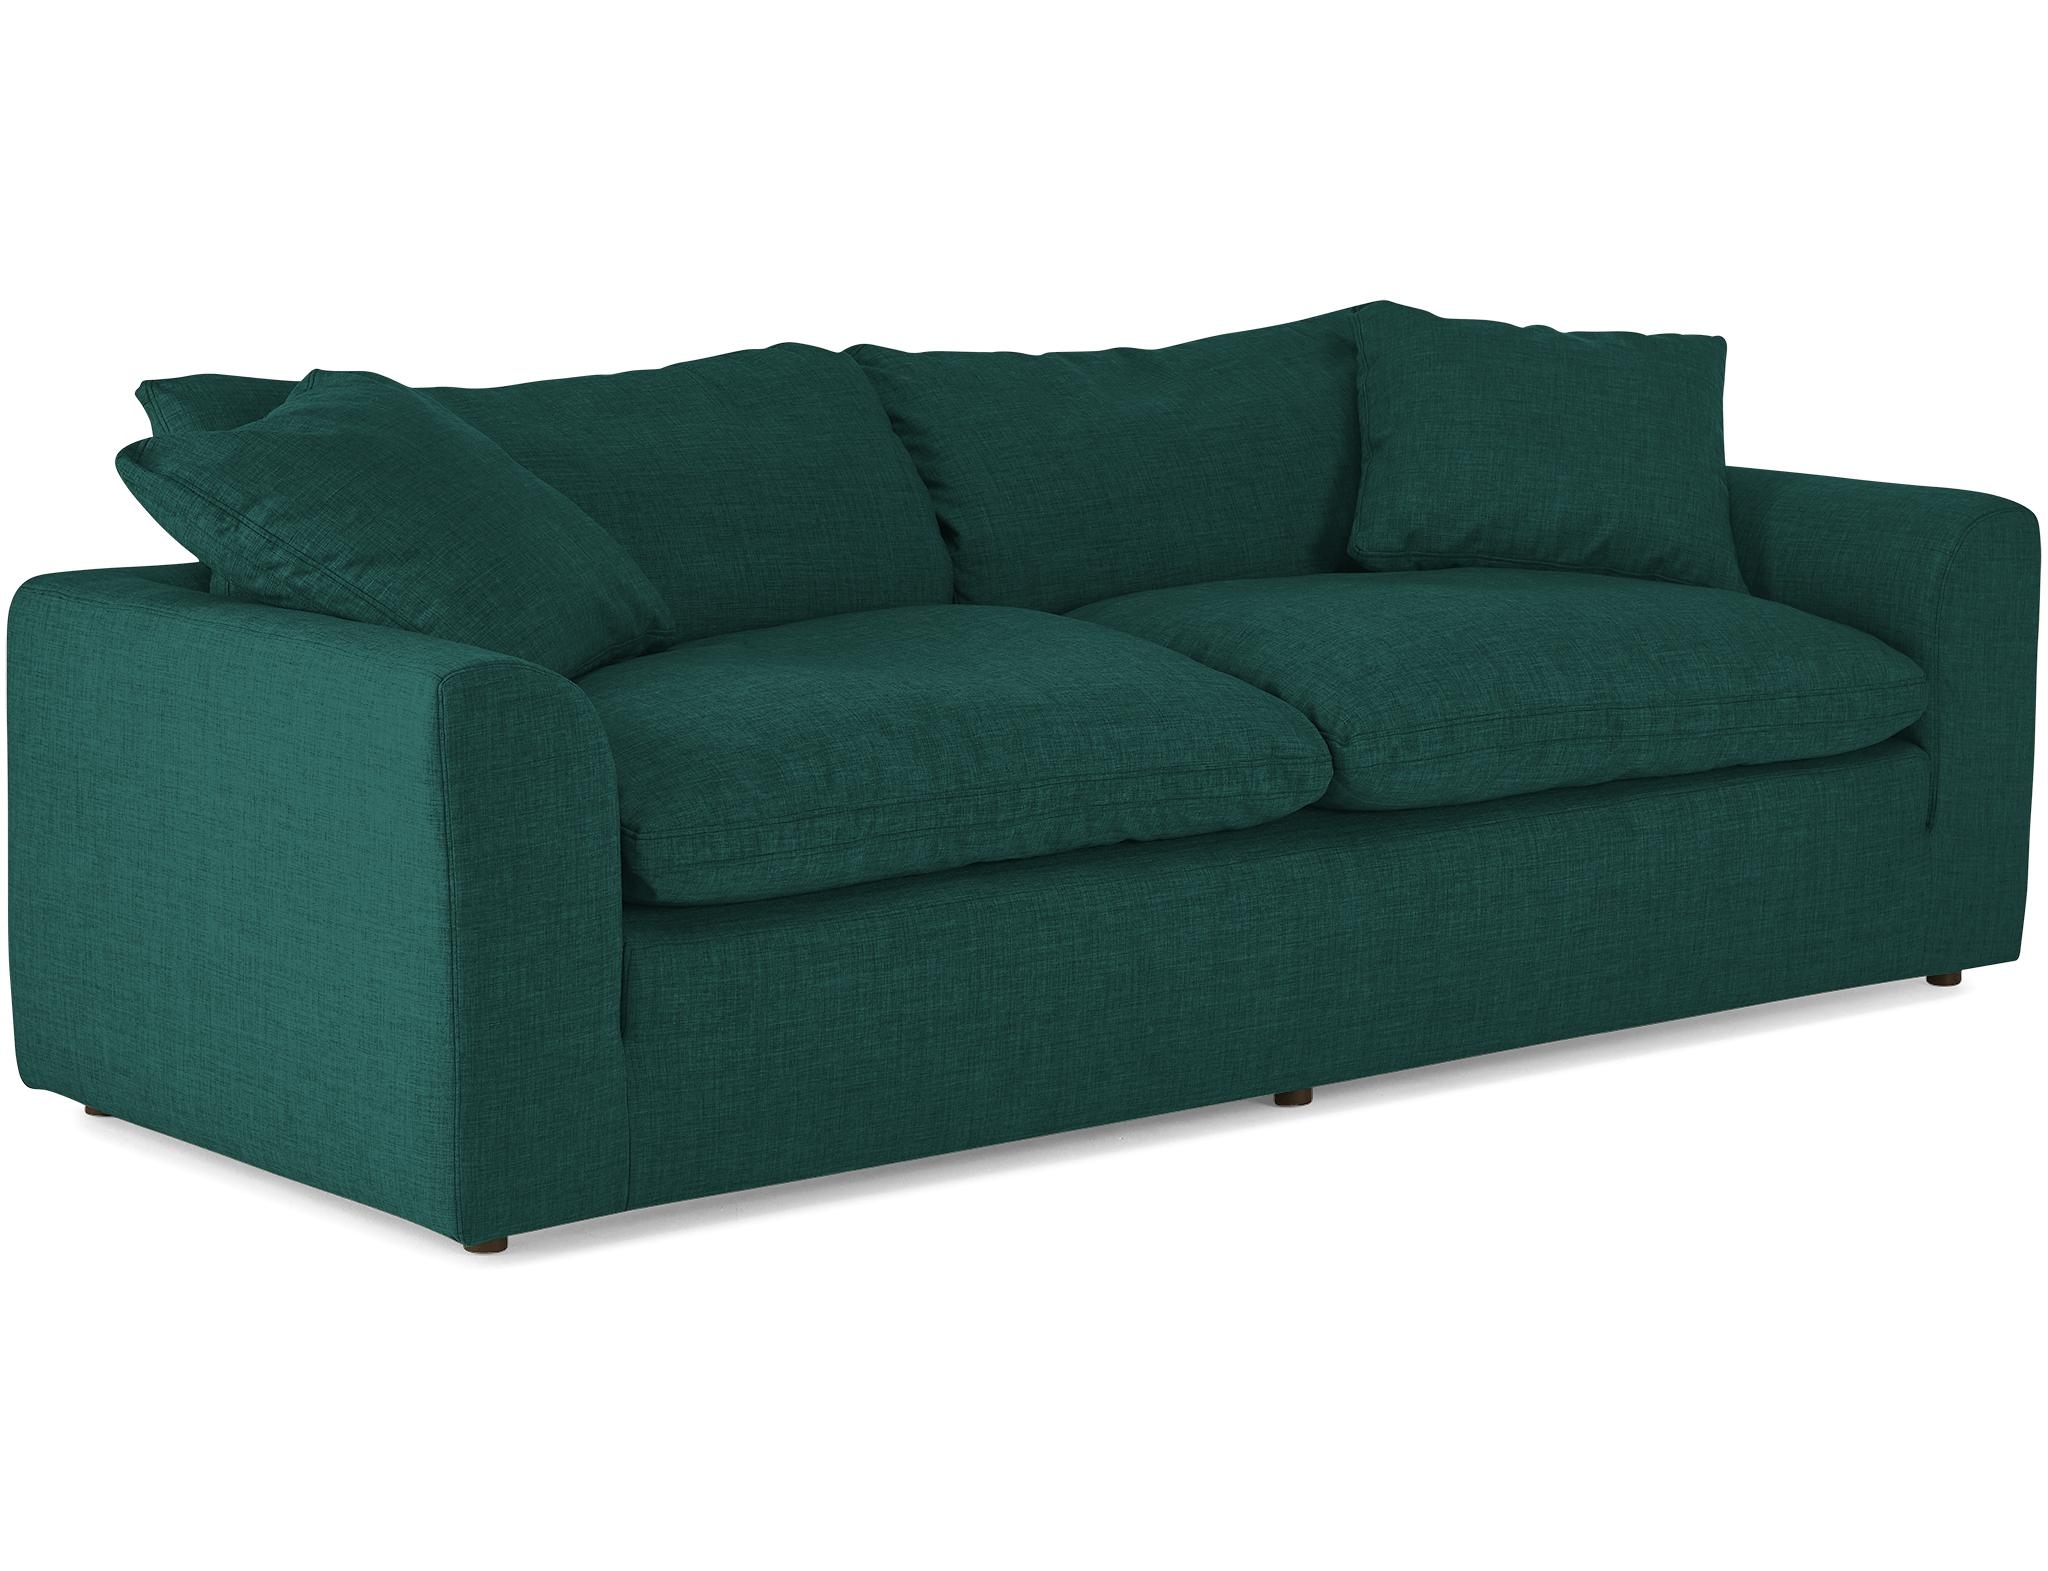 Blue Bryant Mid Century Modern Sofa - Prime Peacock - Image 1